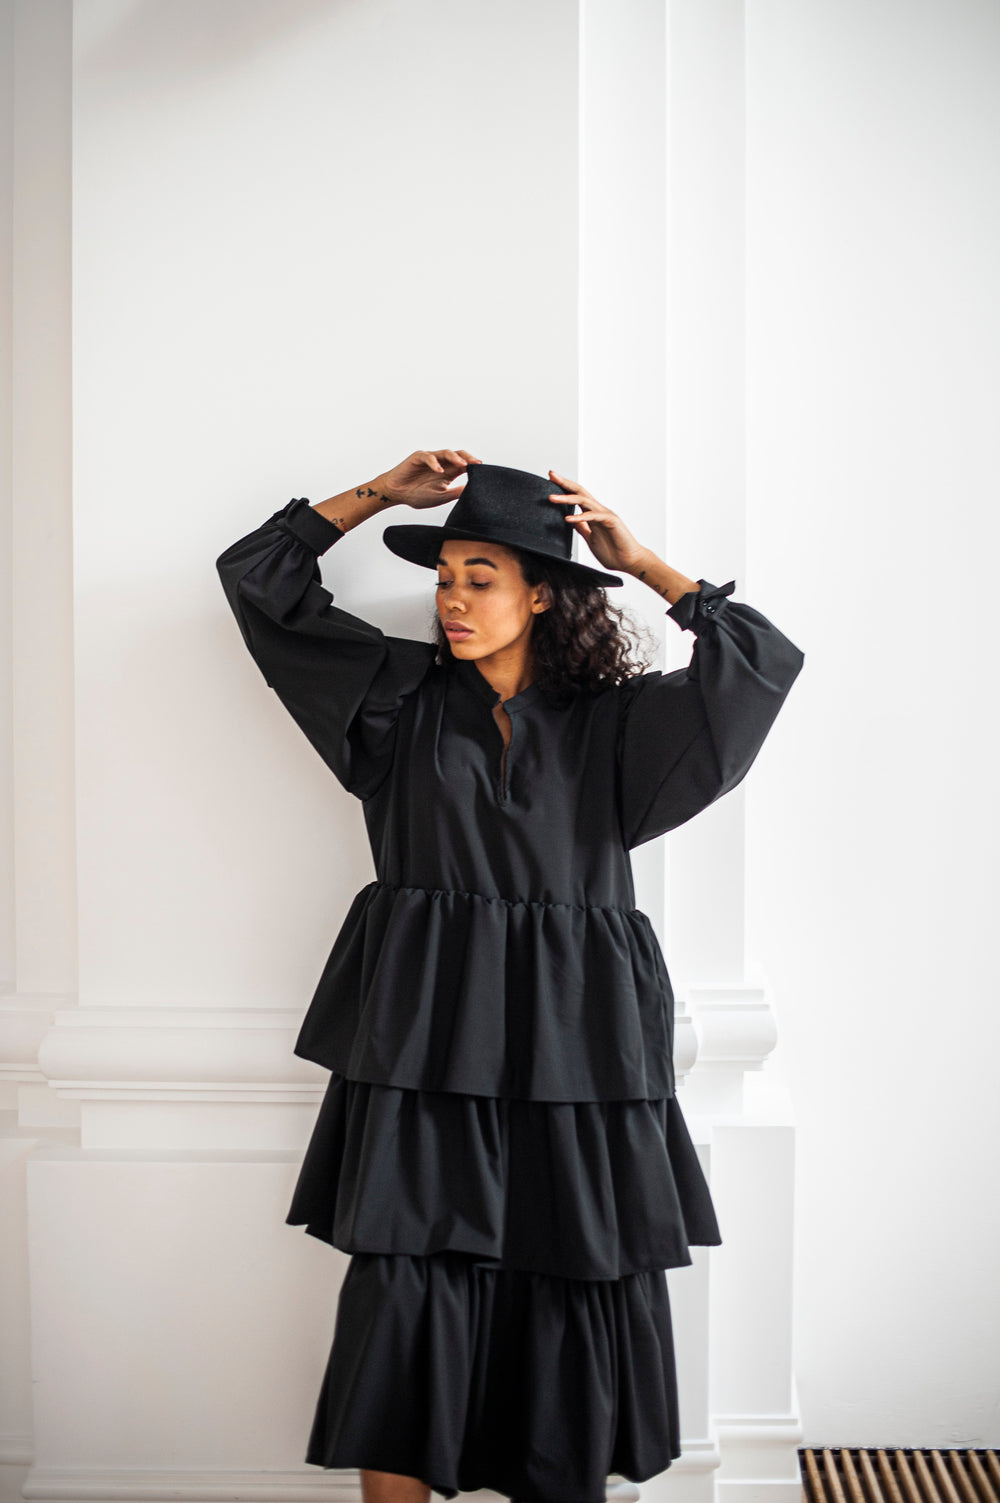 Black merino wool dress with a ruffle skirt and voluminous sleeves boasting French cuffs.